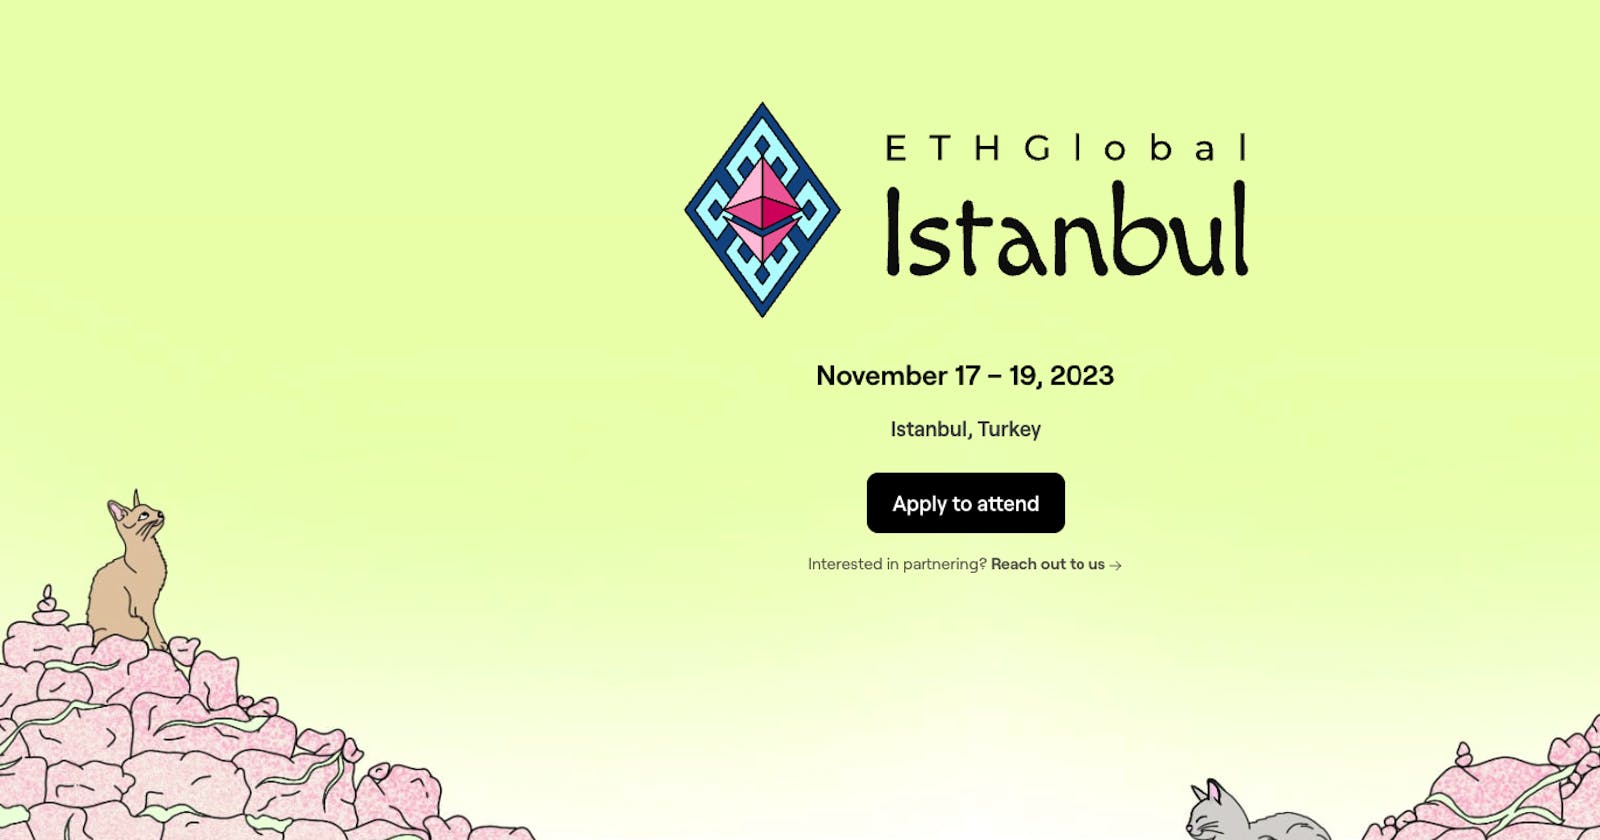 ETHGlobal Istanbul